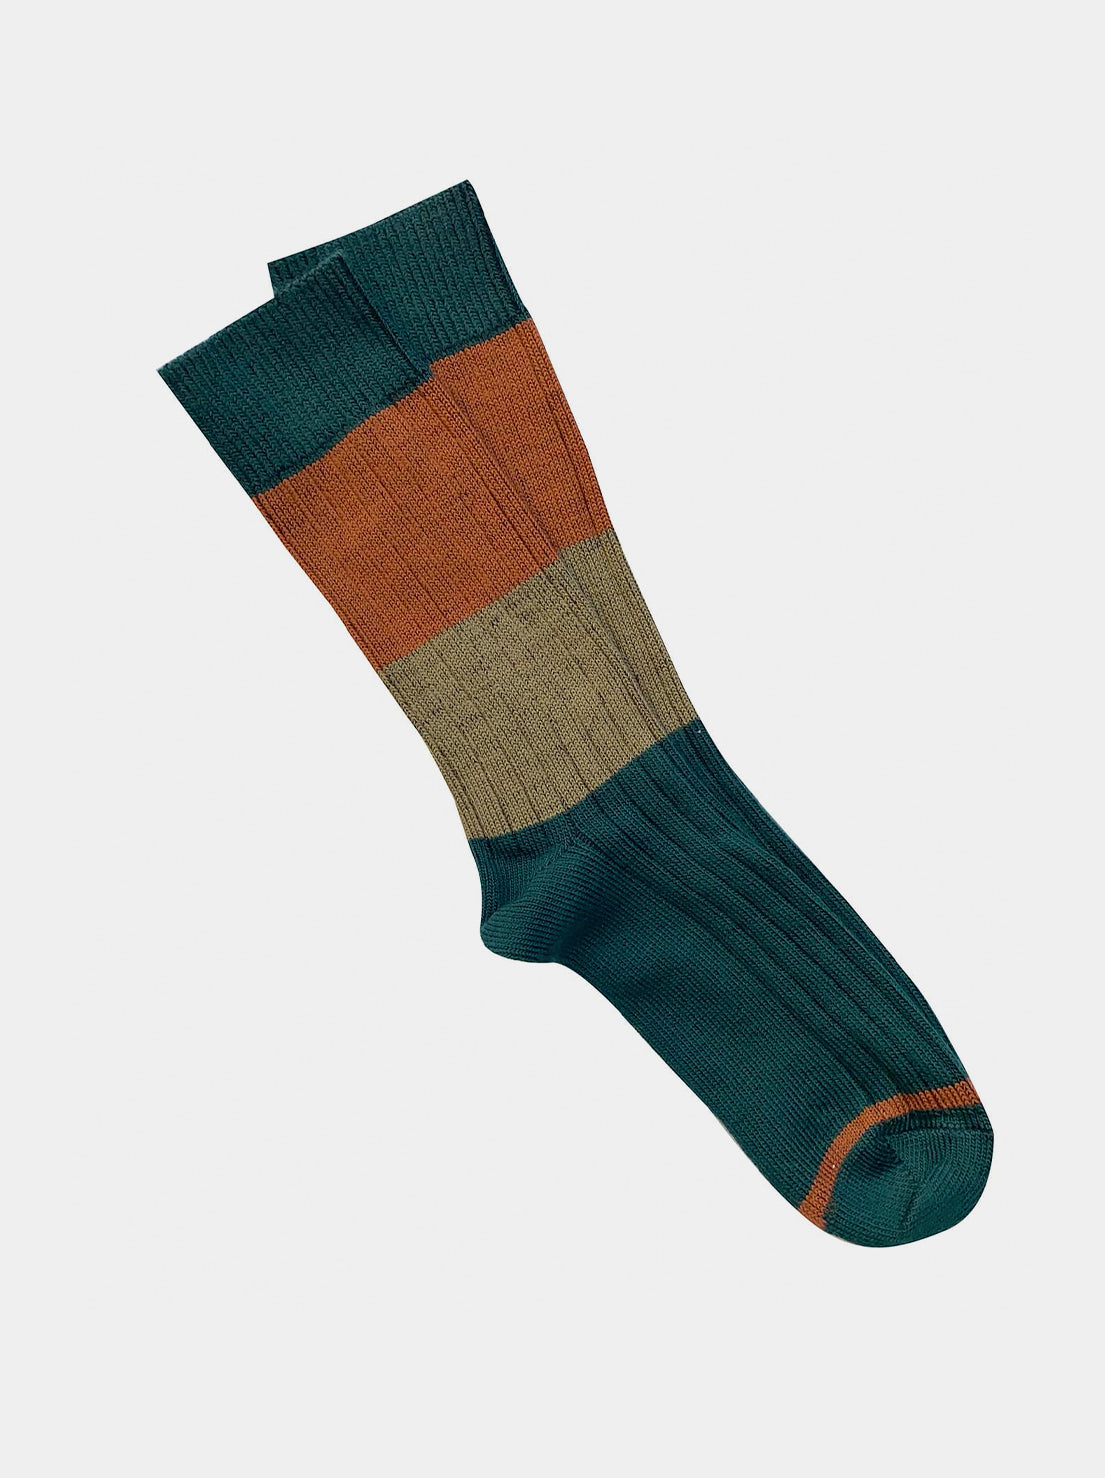 Tightology - Chunky Rib Merino Wool Socks - Green